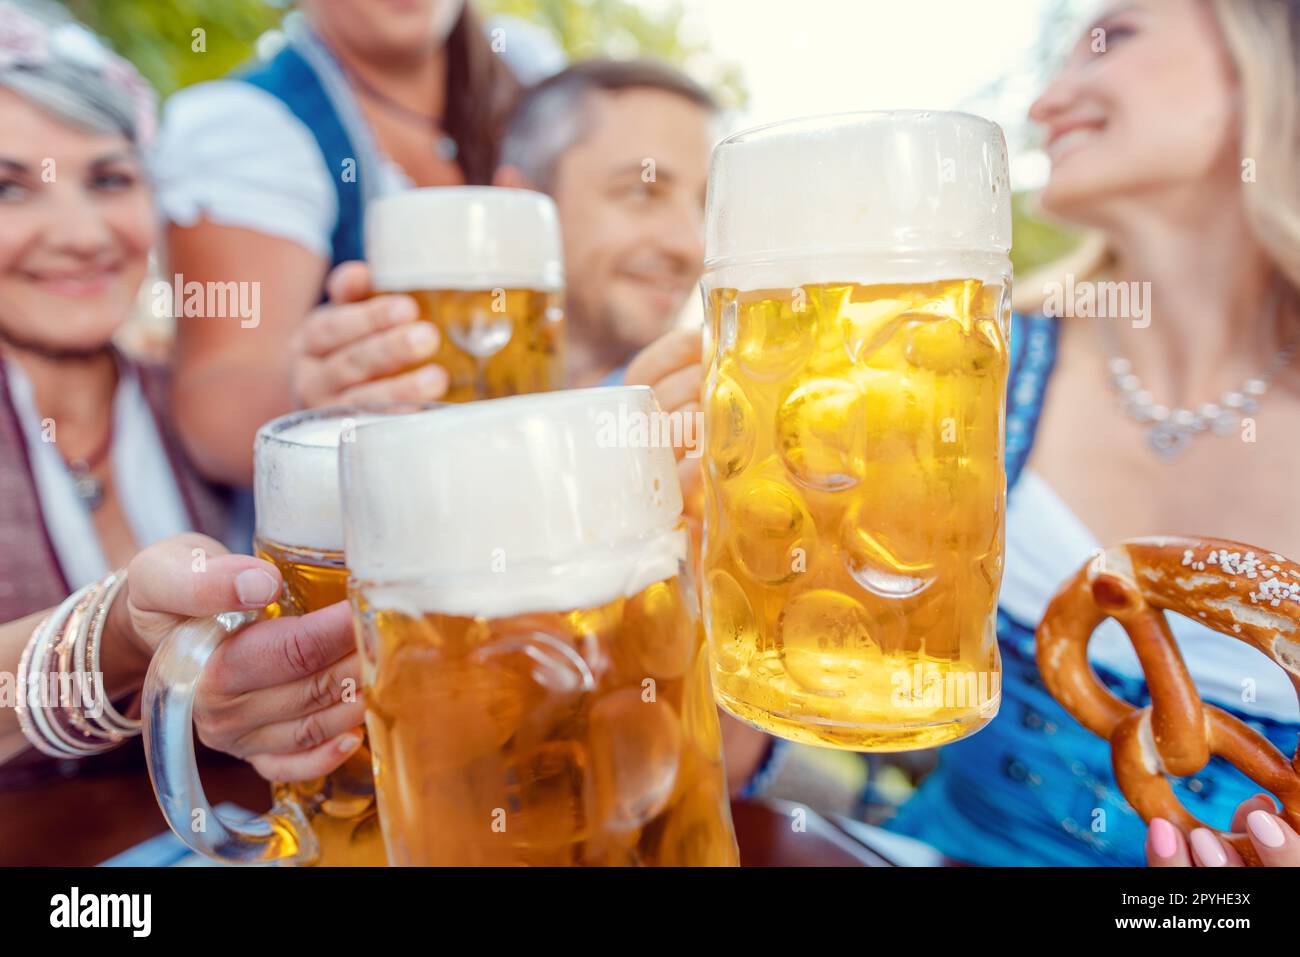 Clinking with beers in Bavarian beergarden Stock Photo